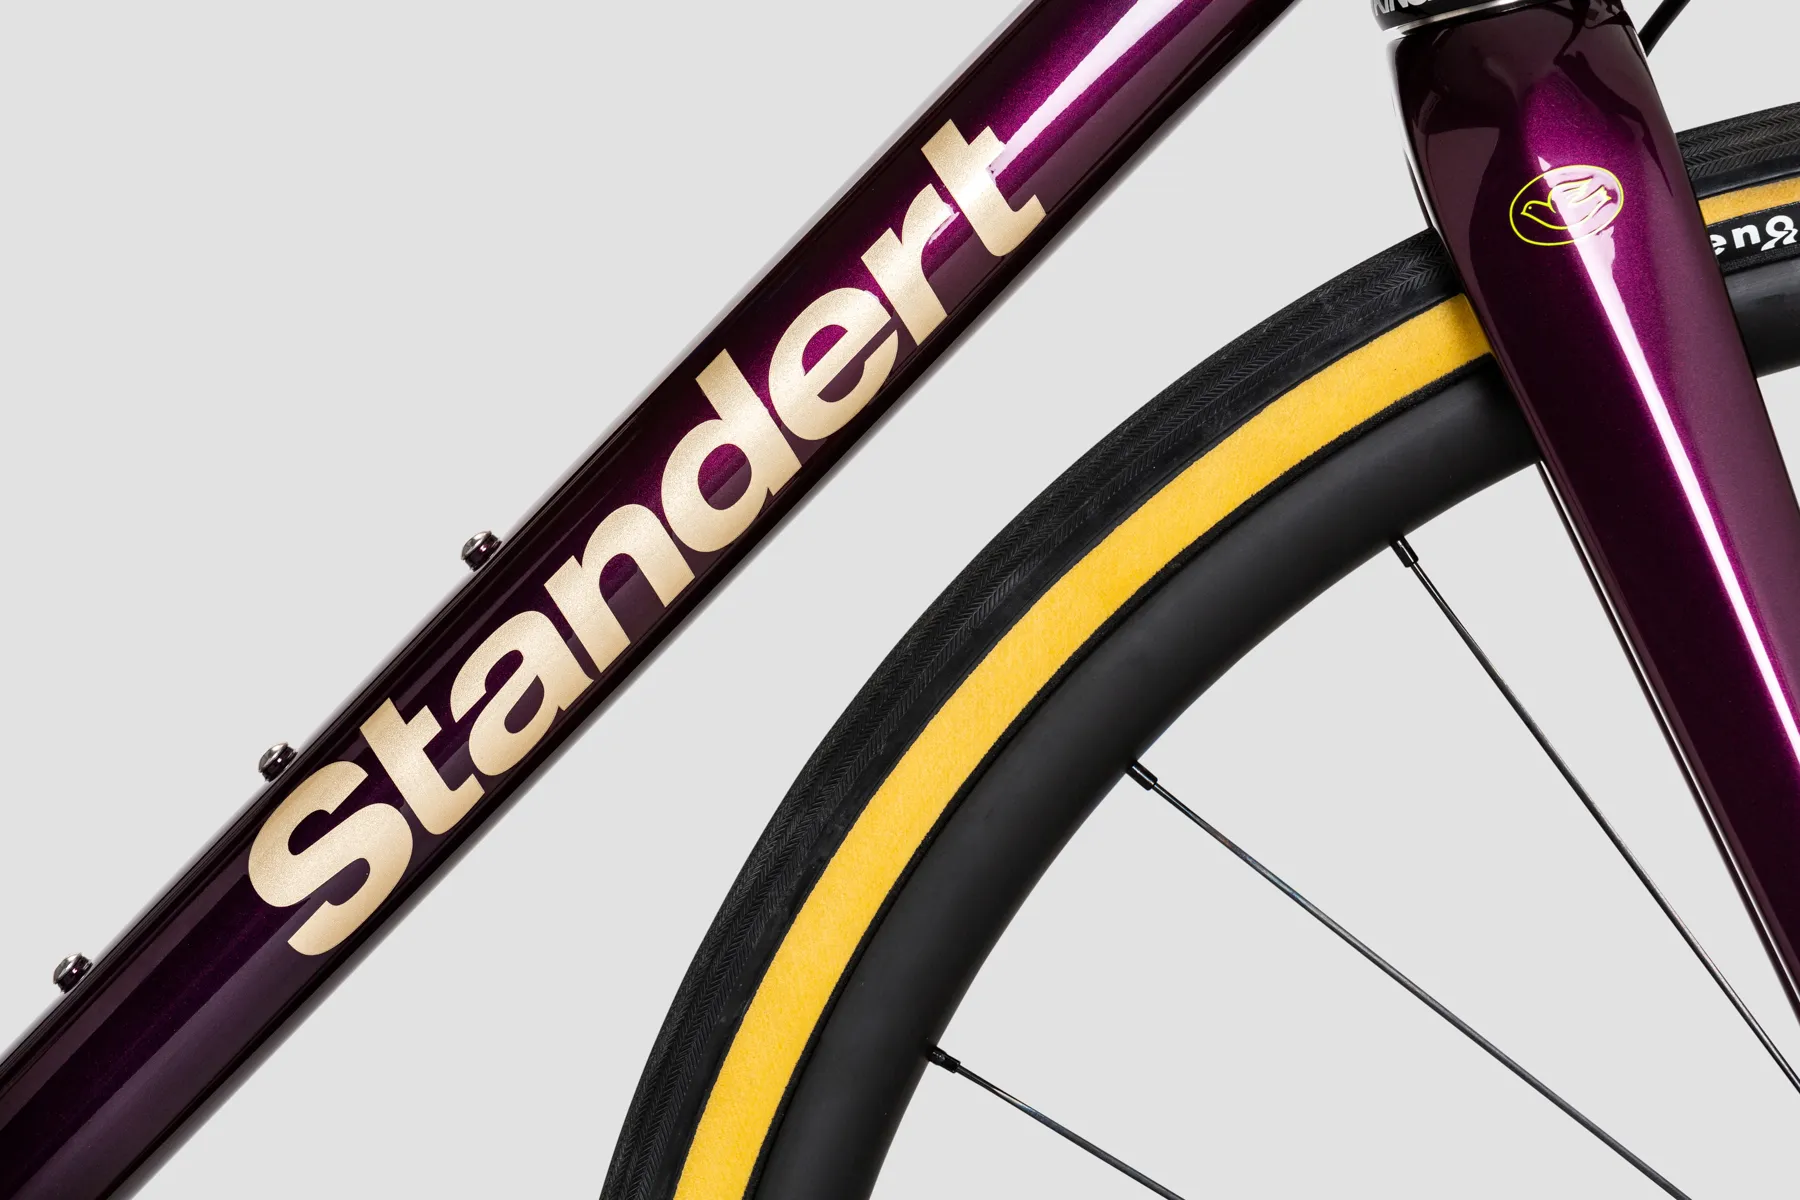 Pfadfinder Endurance Bike PDM by Standert Bicycles